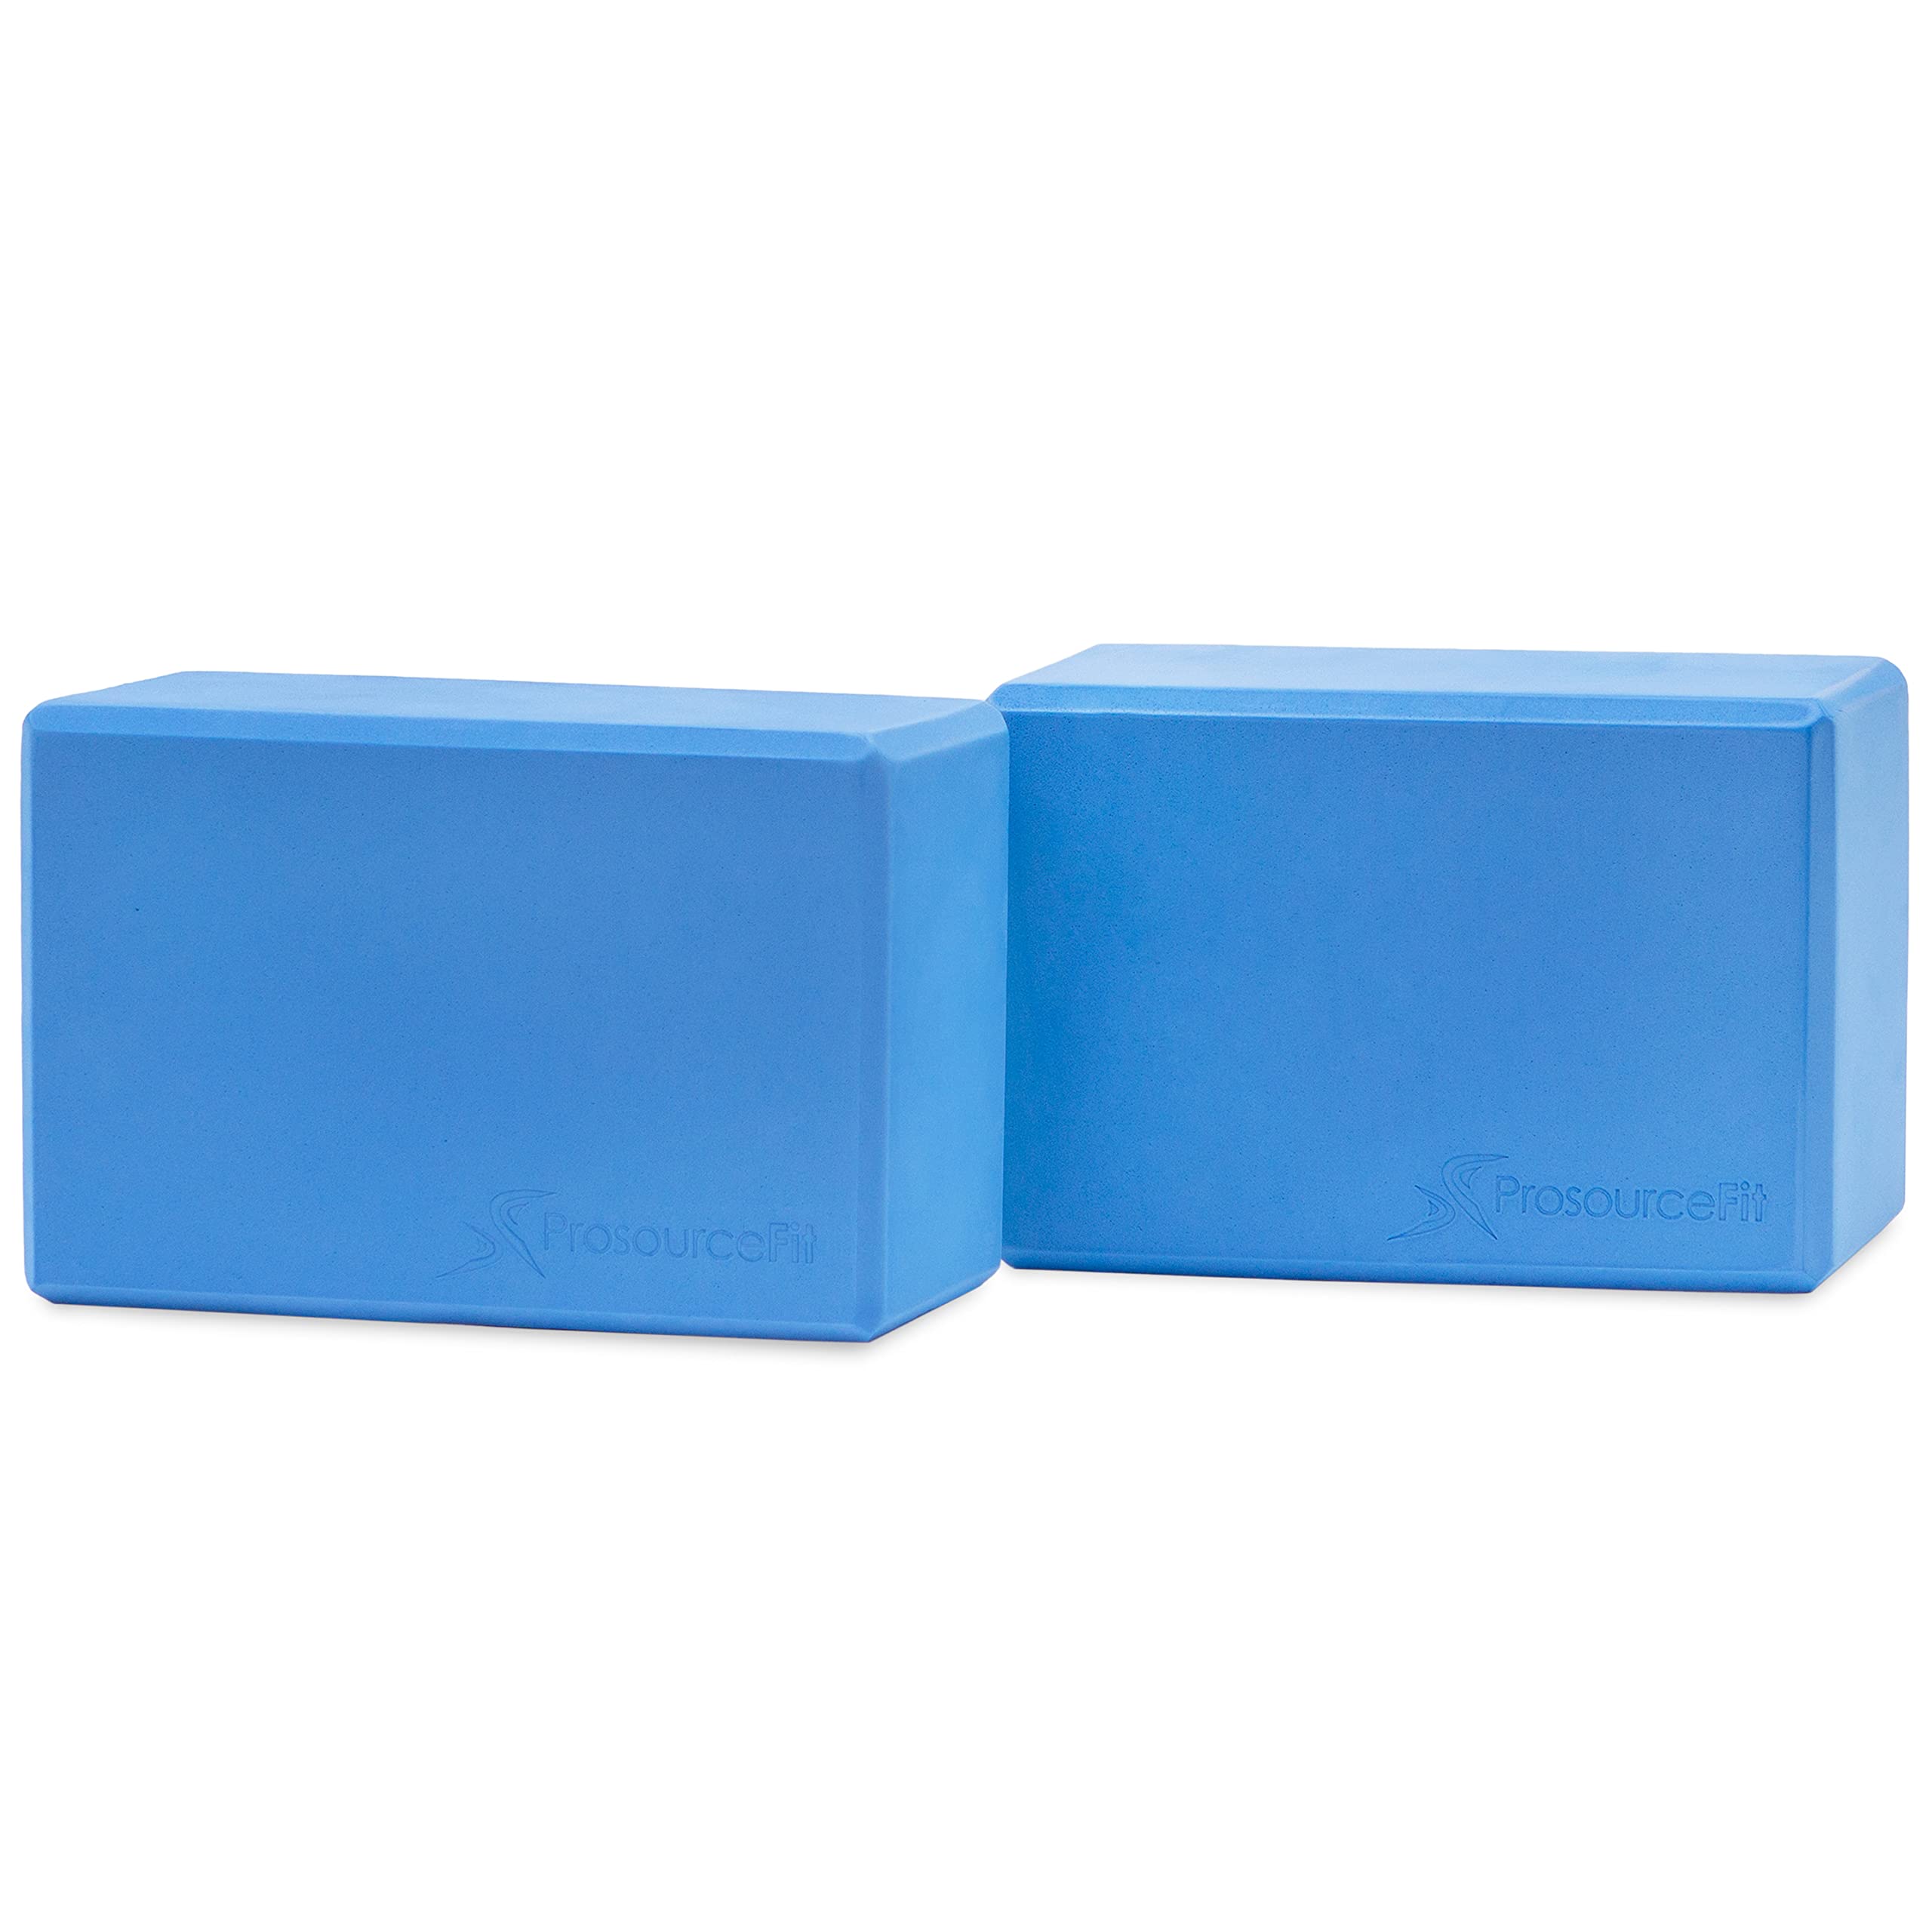 Extra Large Foam Yoga Block